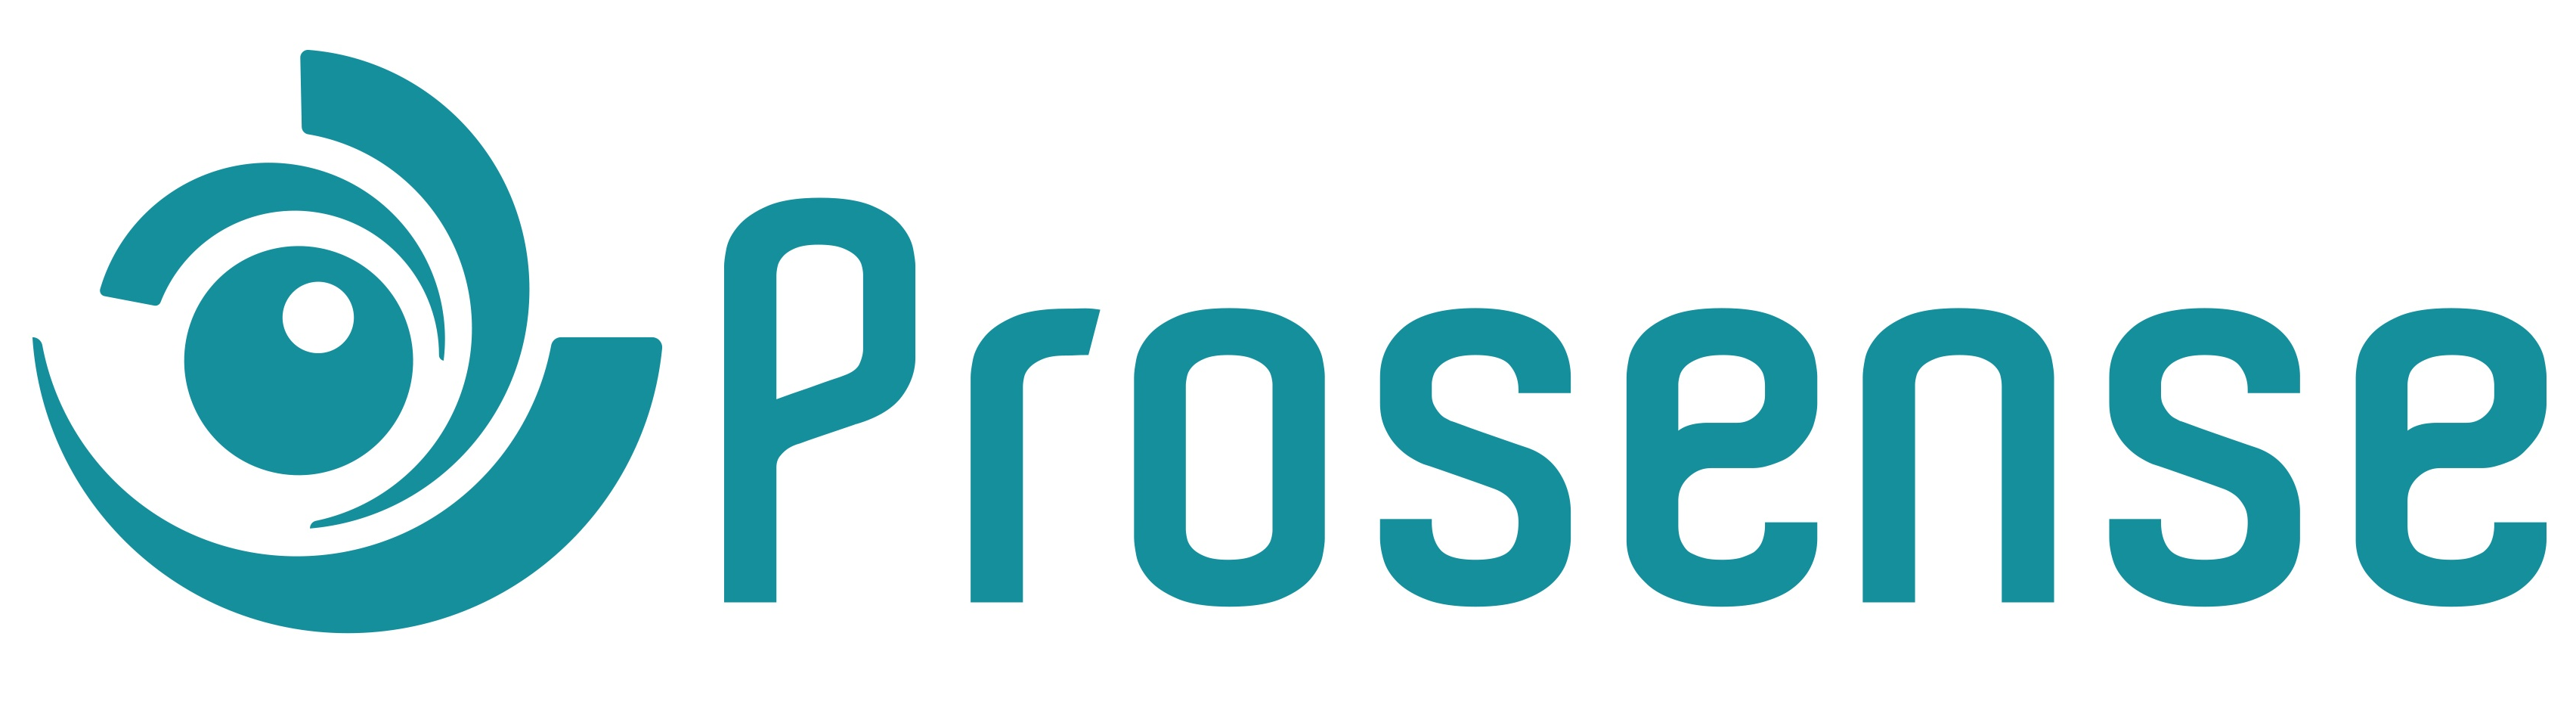 Prosense logo 2021